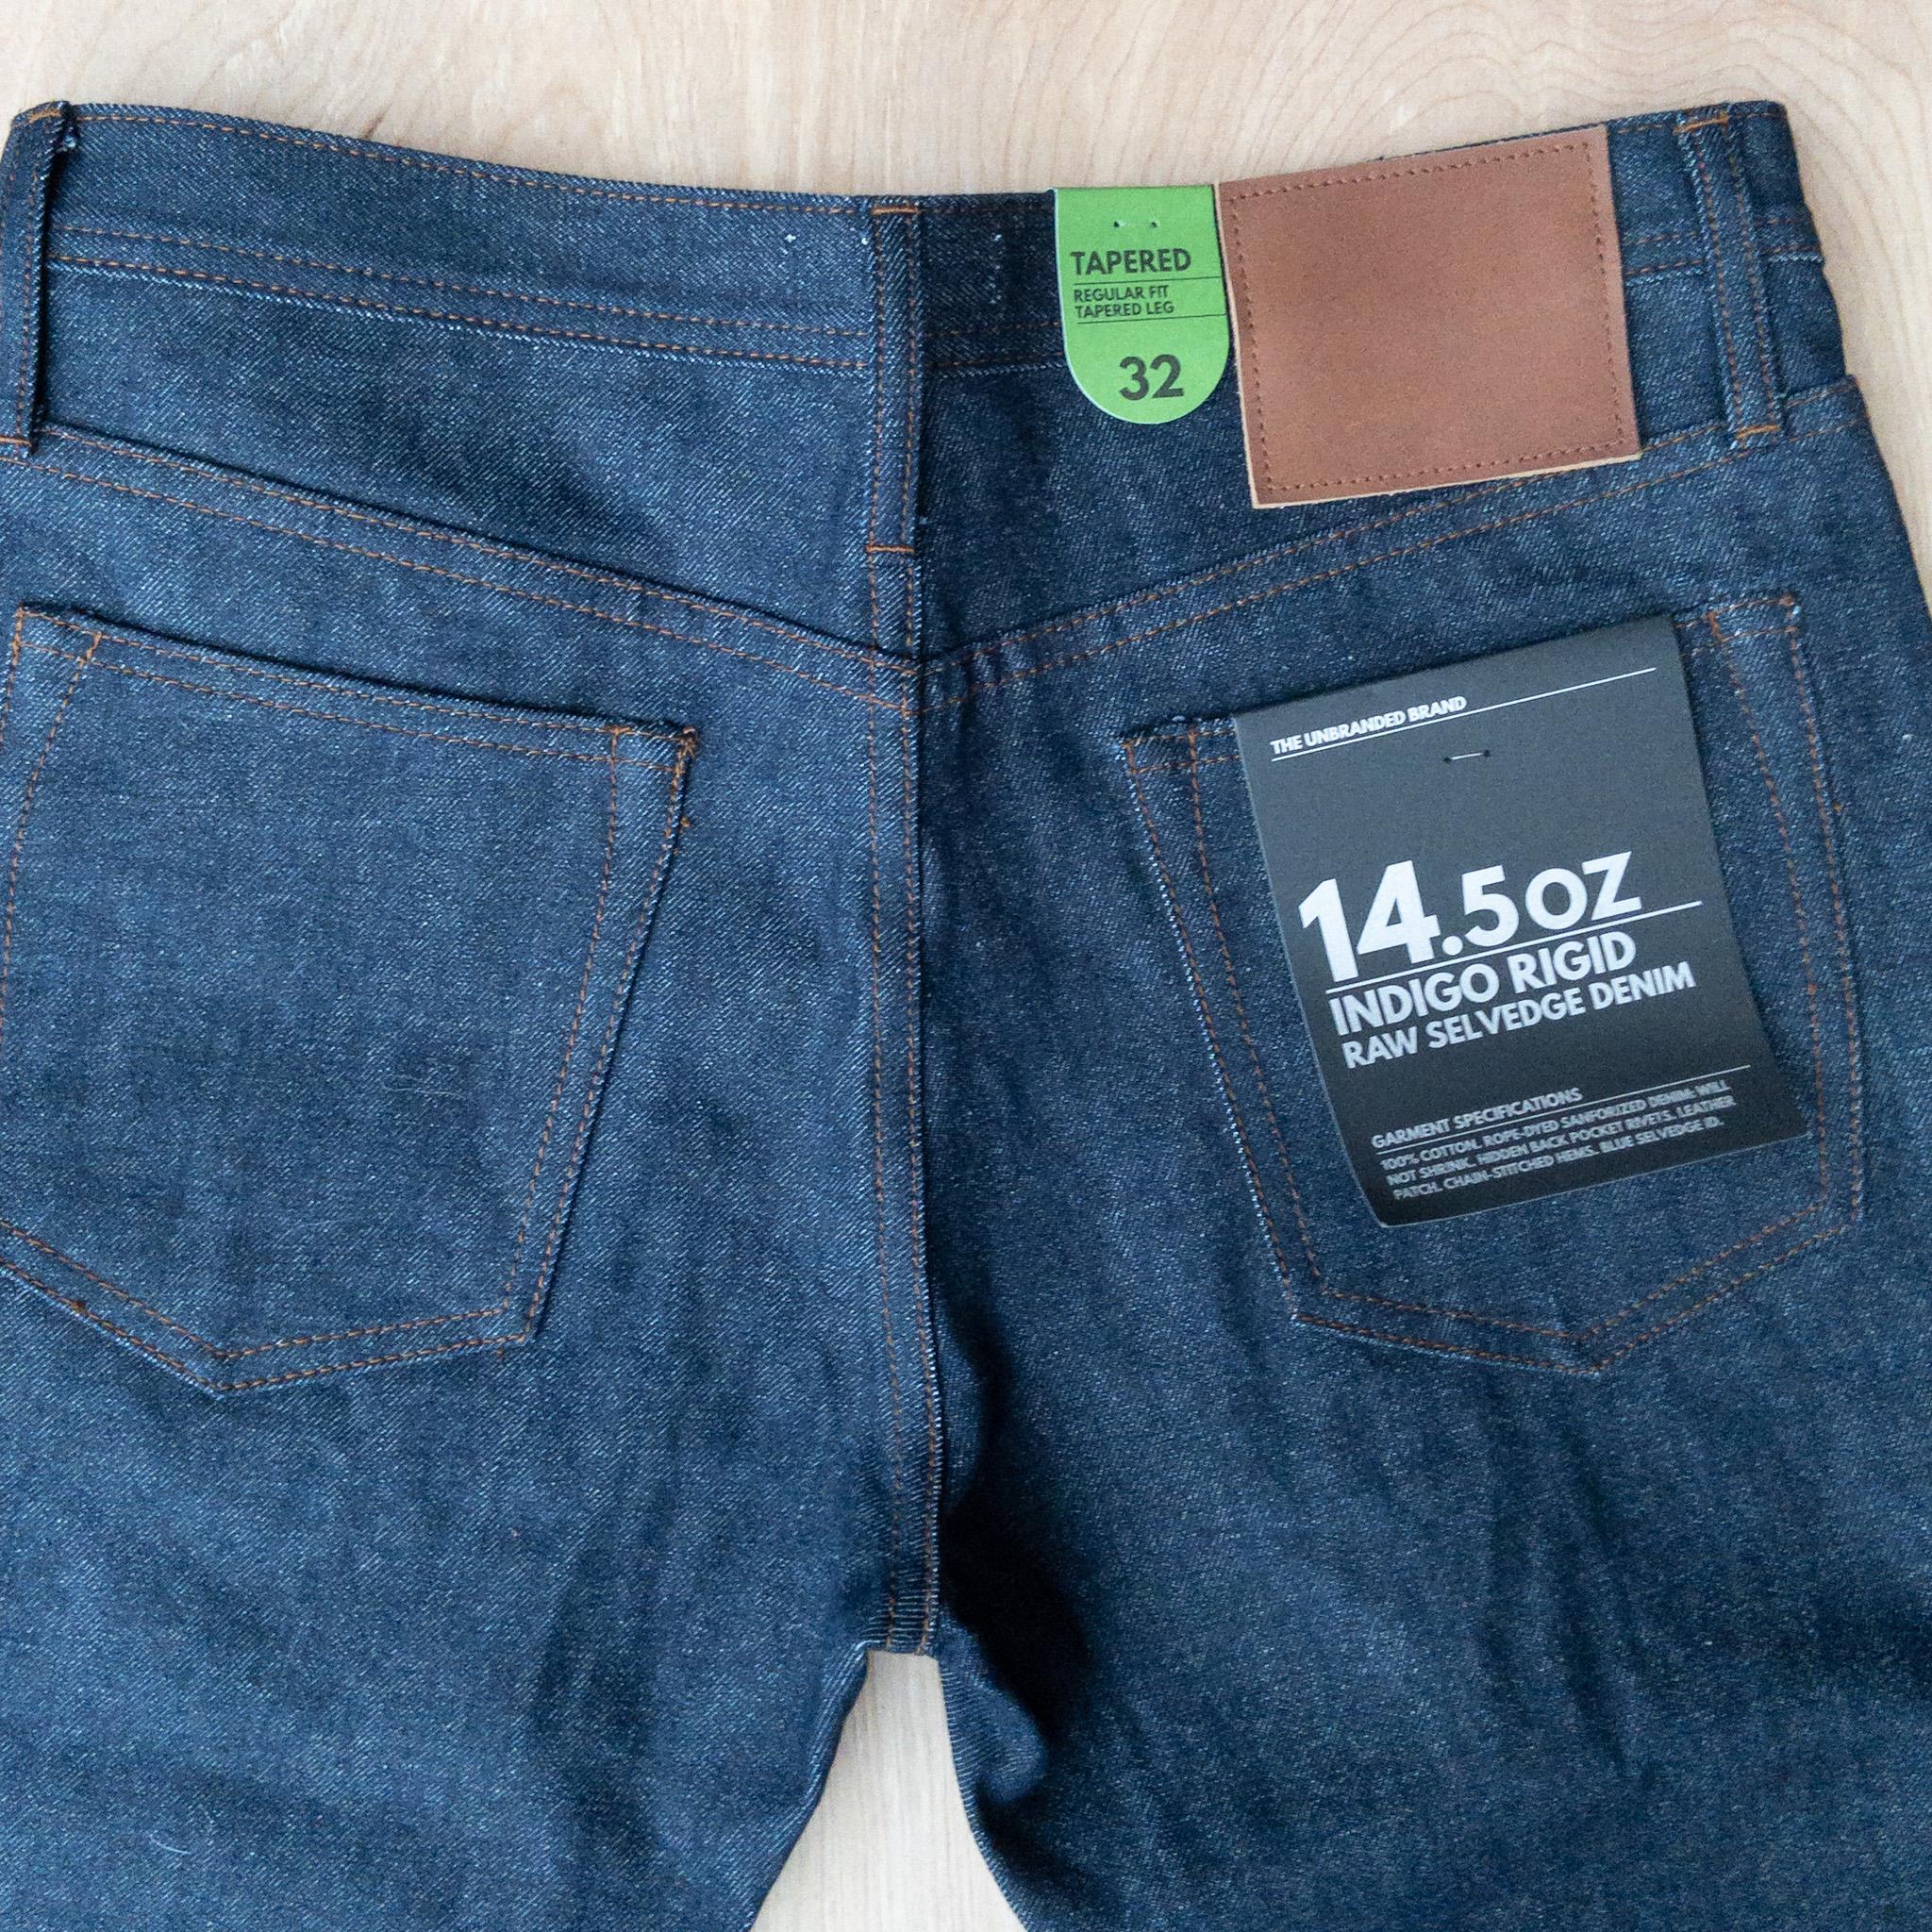 Unbranded UB201 tapered fit 14.5 oz. indigo selvedge jeans - Crimson  Serpents Outpost